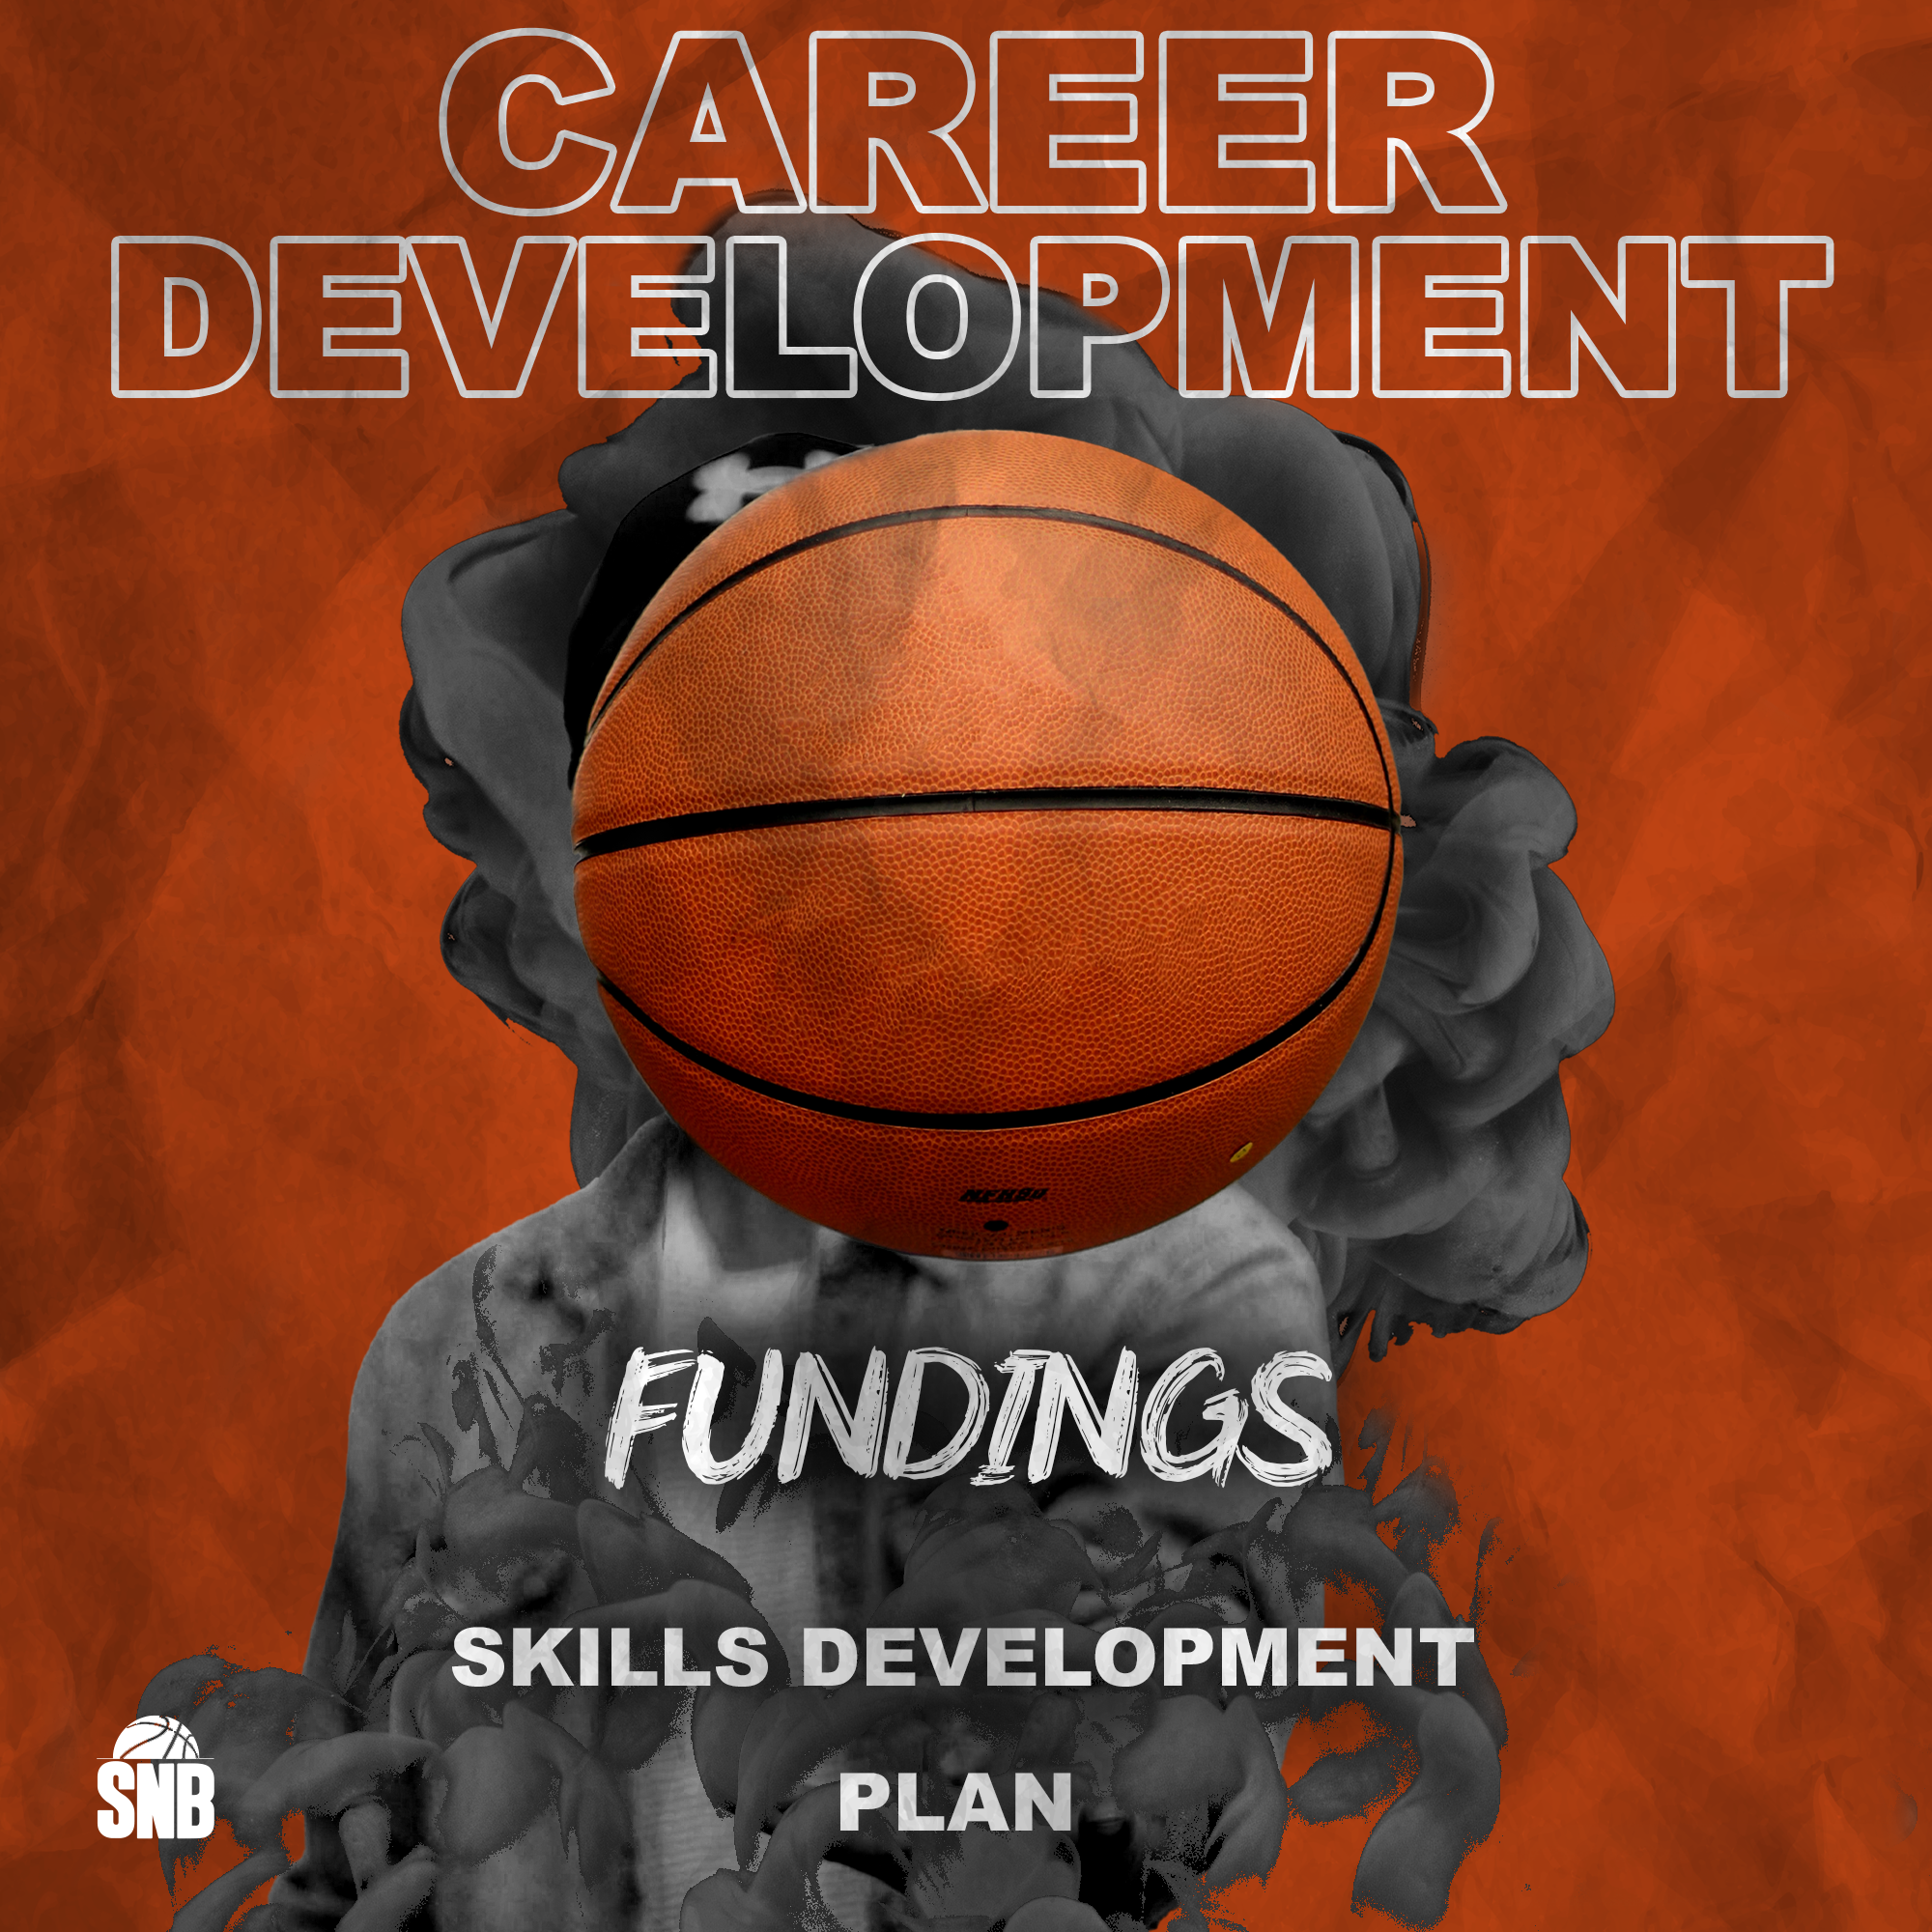 Skills development plan